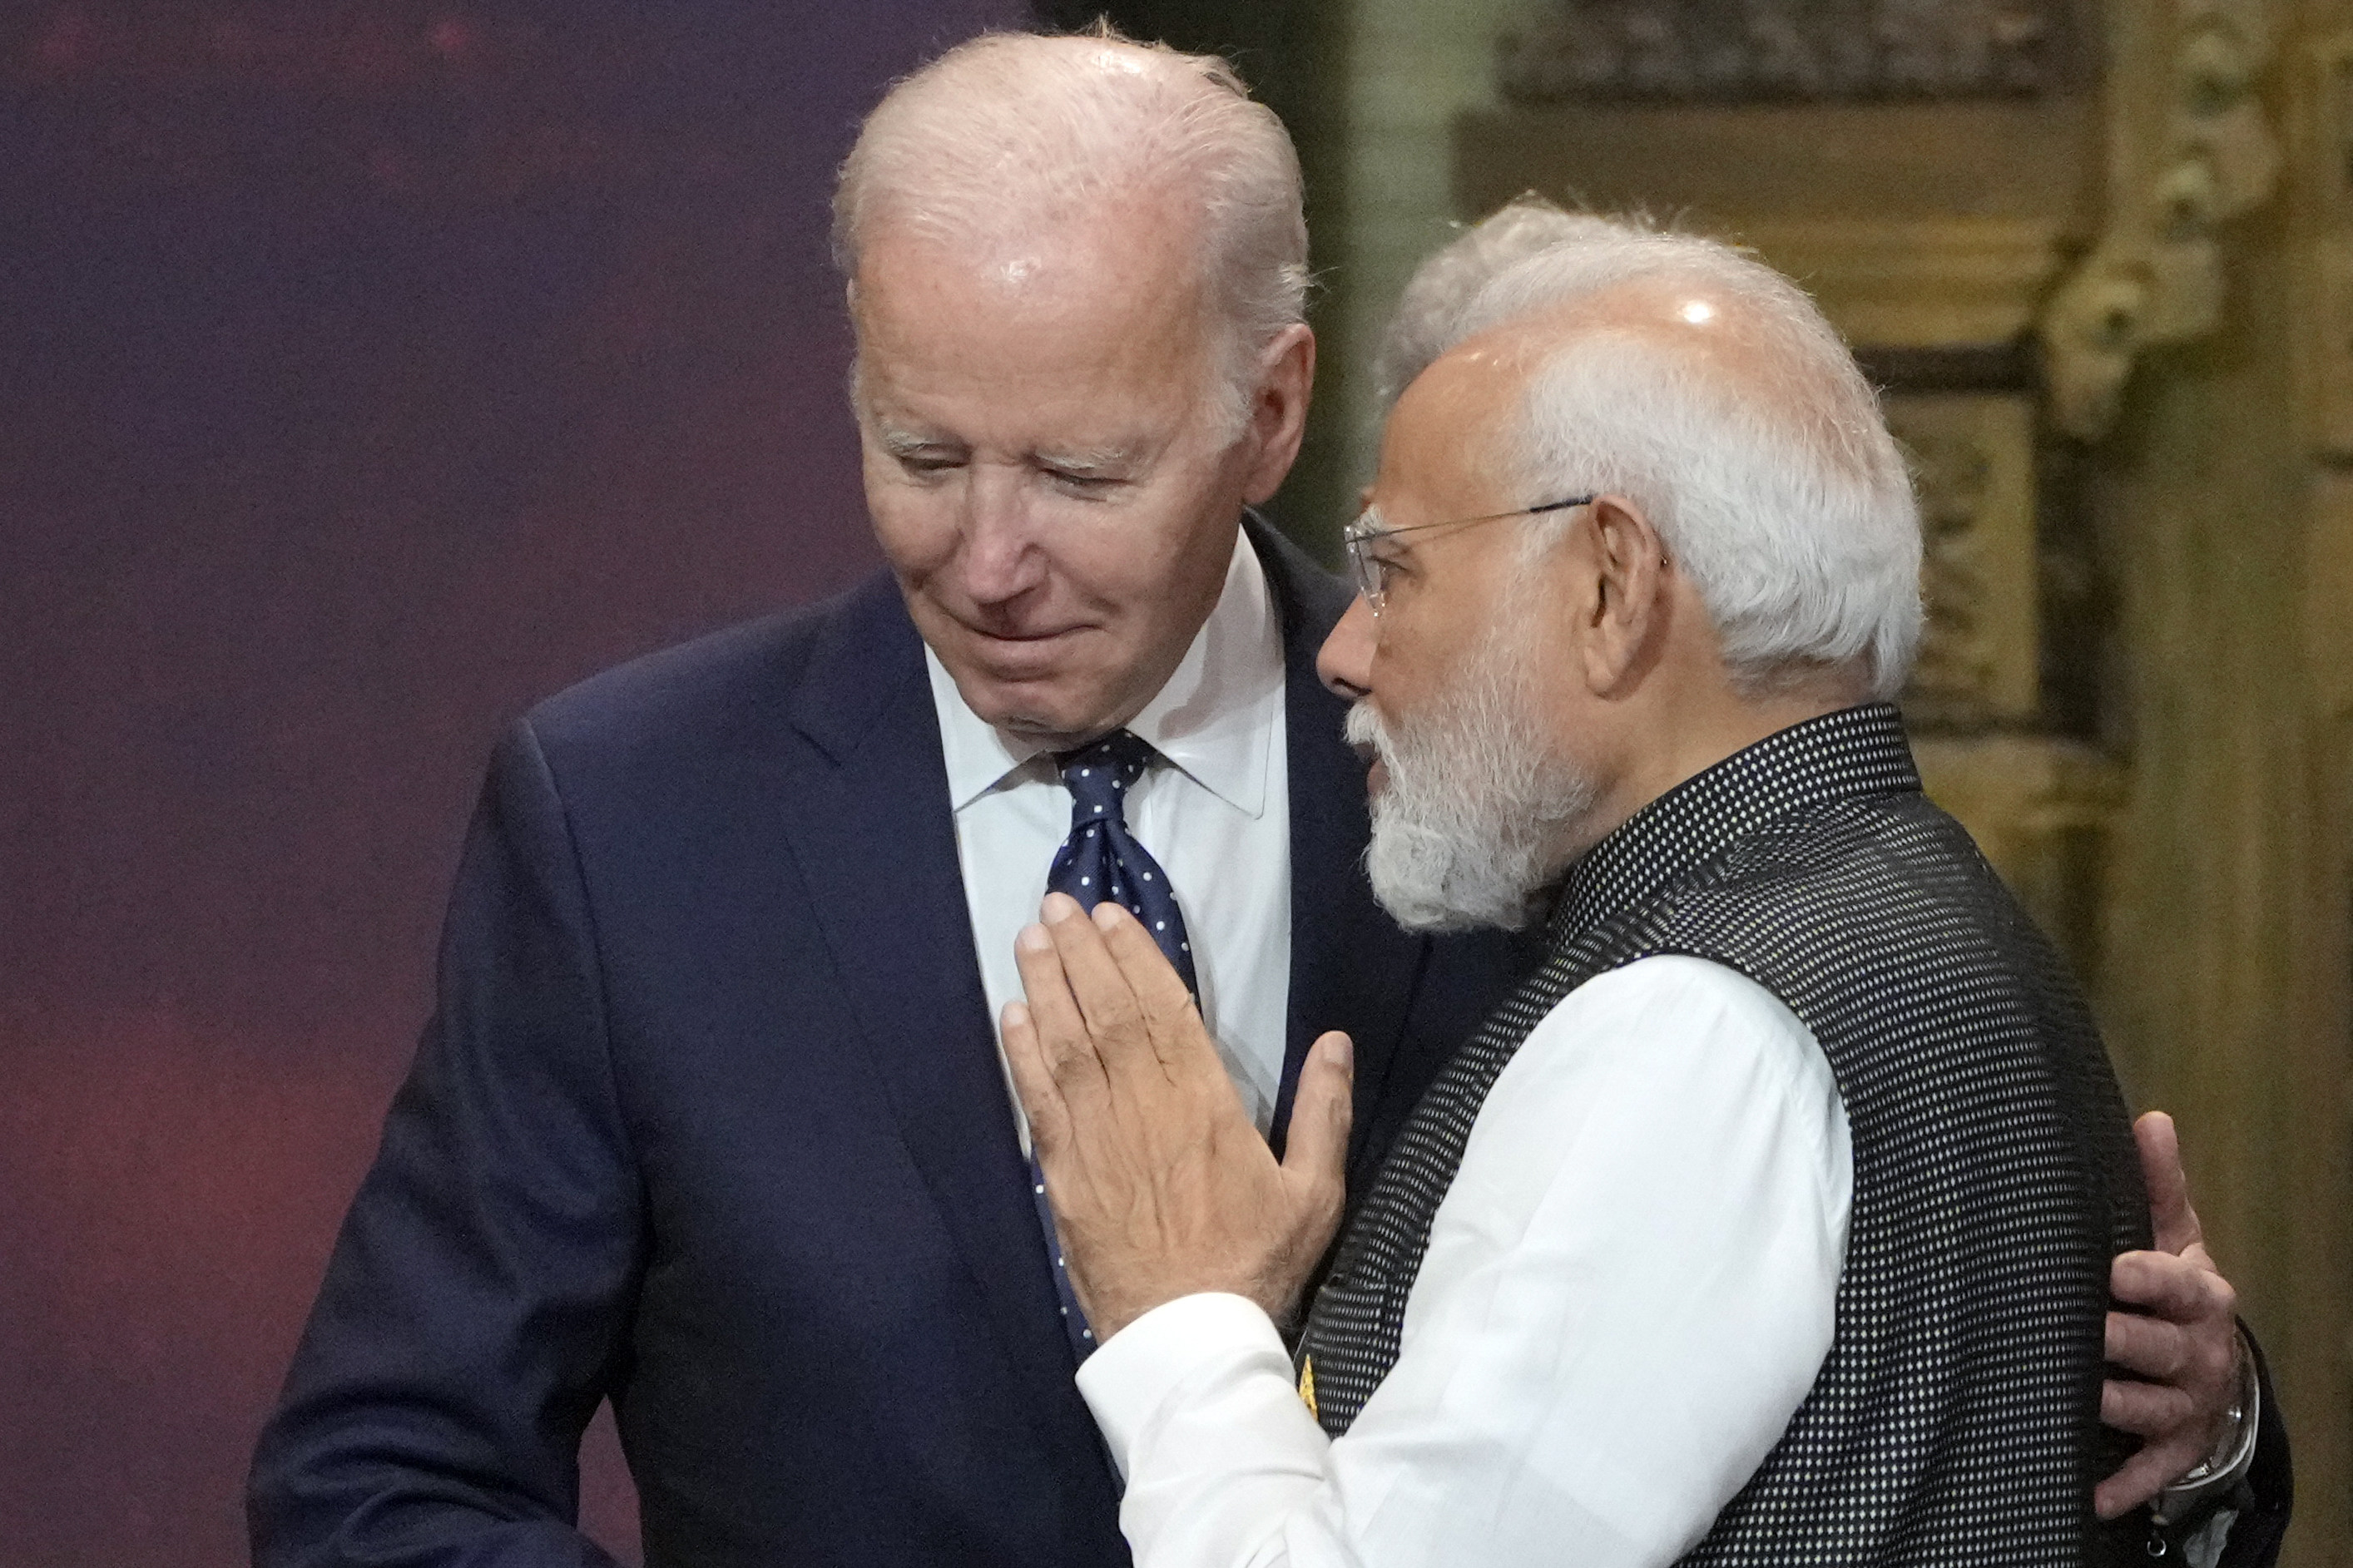 US President Joe Biden and India’s Prime Minister Narendra Modi at the G20 summit in Bali, Indonesia last year. Photo: AP